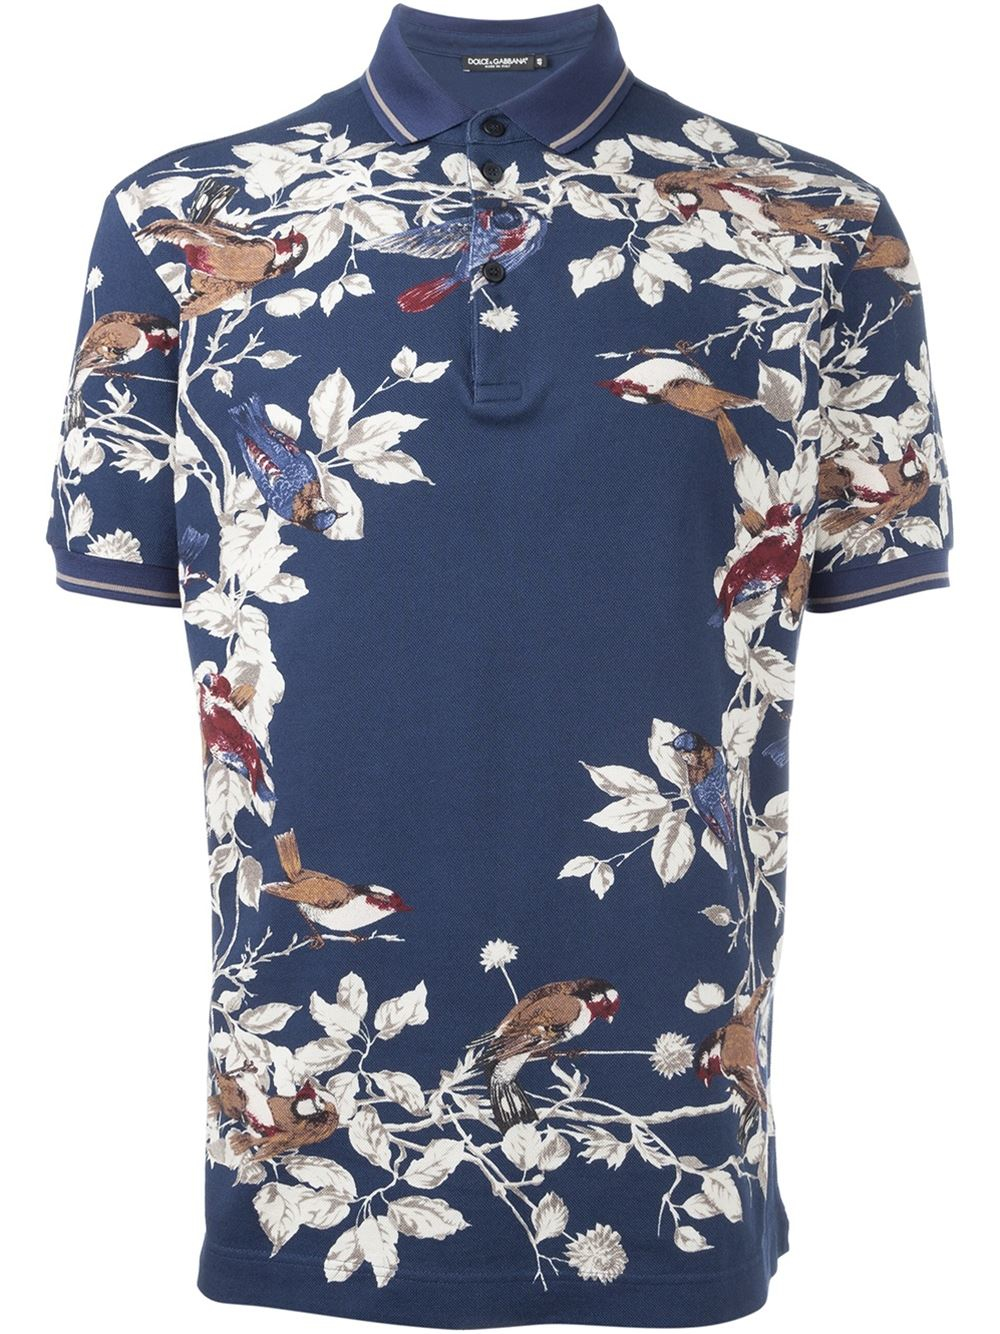 Dolce & Gabbana Bird Print Polo Shirt in Blue for Men - Lyst